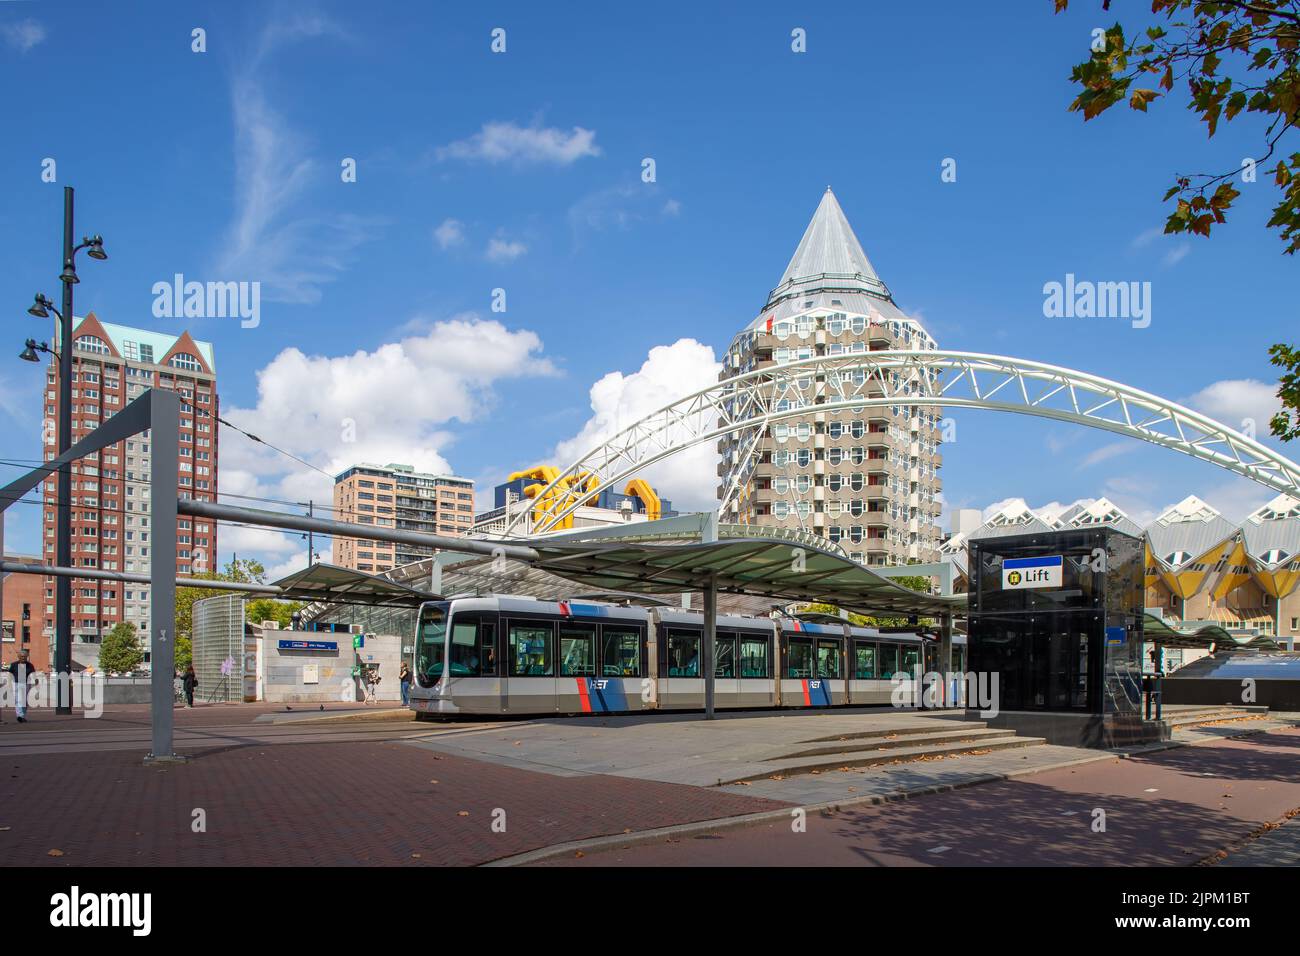 The Blaak station, Rotterdam, subway and railway station, the Netherlands Stock Photo